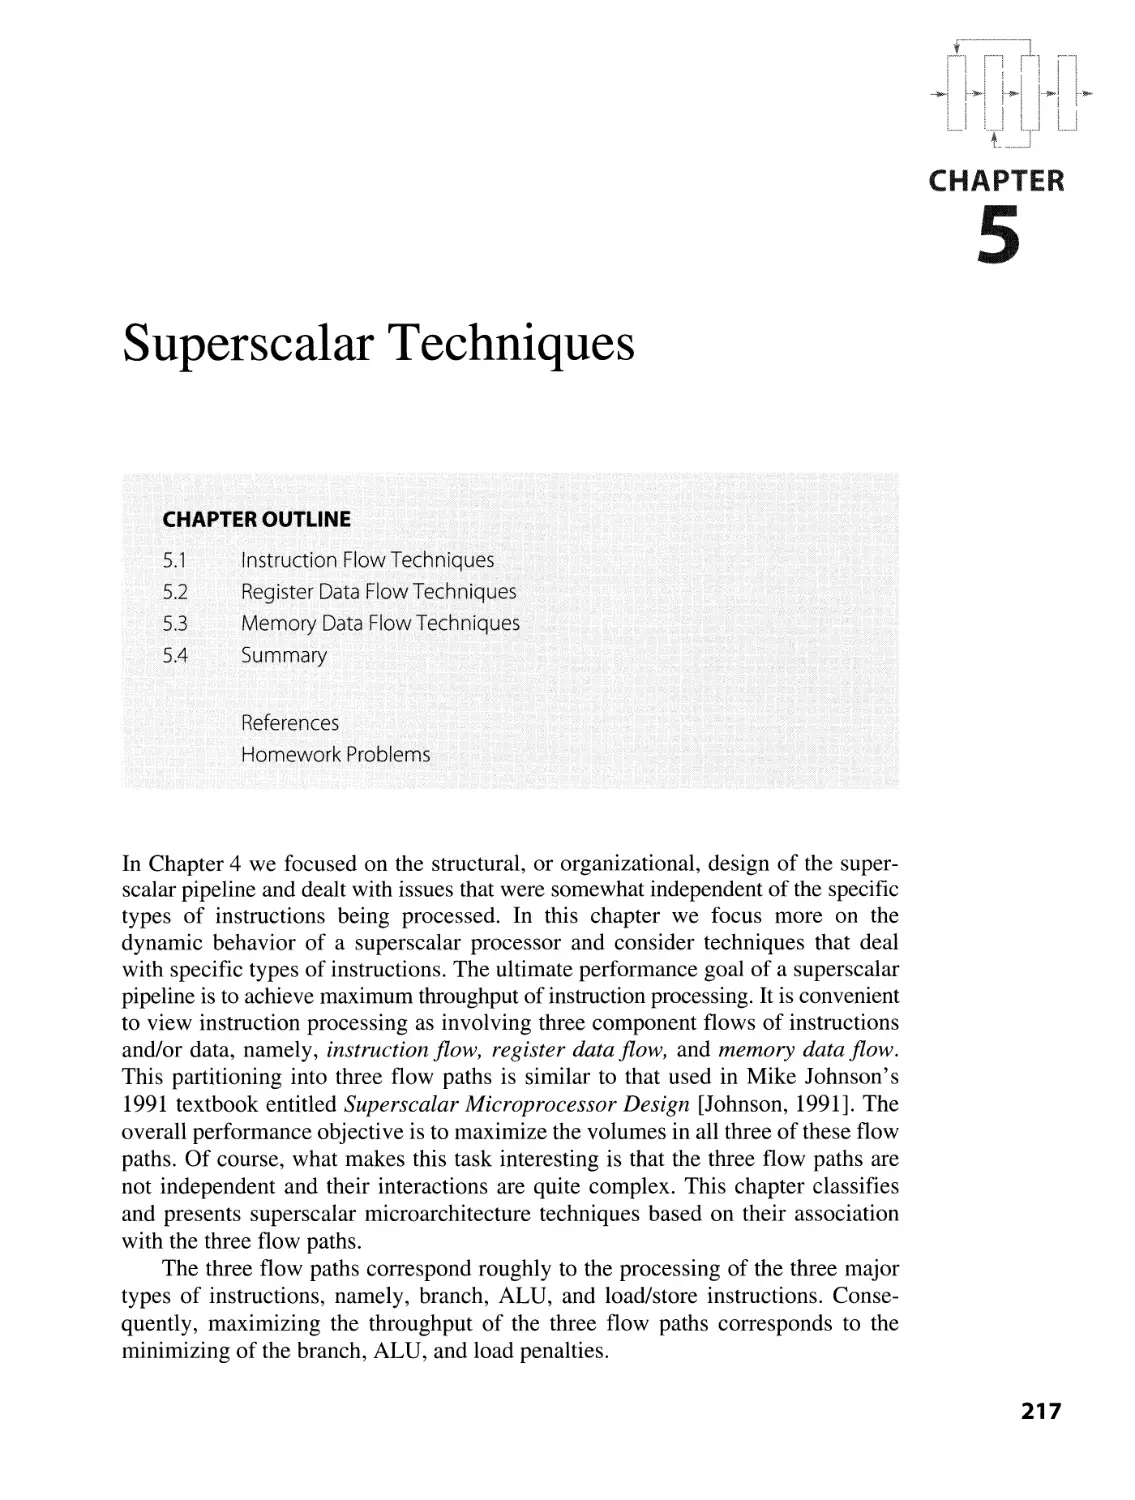 5. Superscalar Techniques